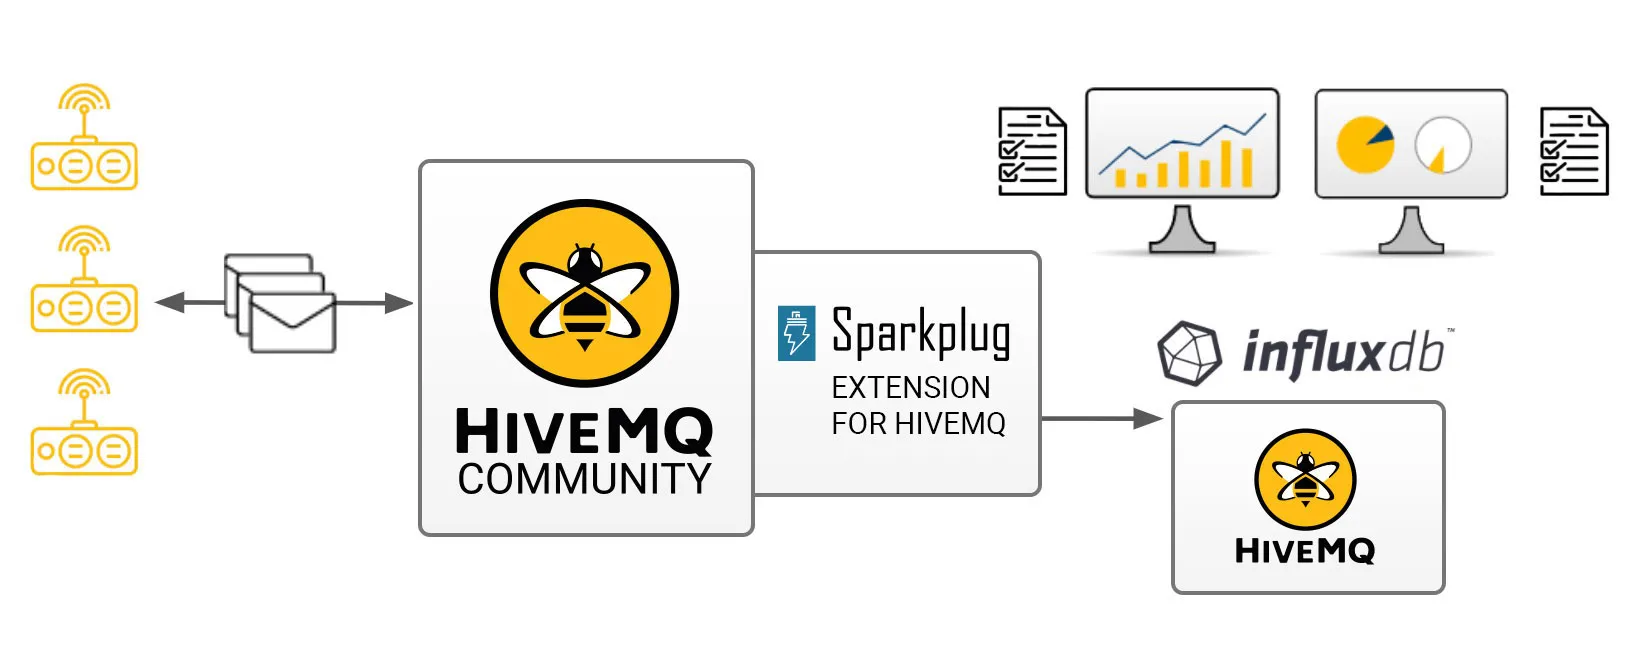 Sparkplug Extension for HiveMQ